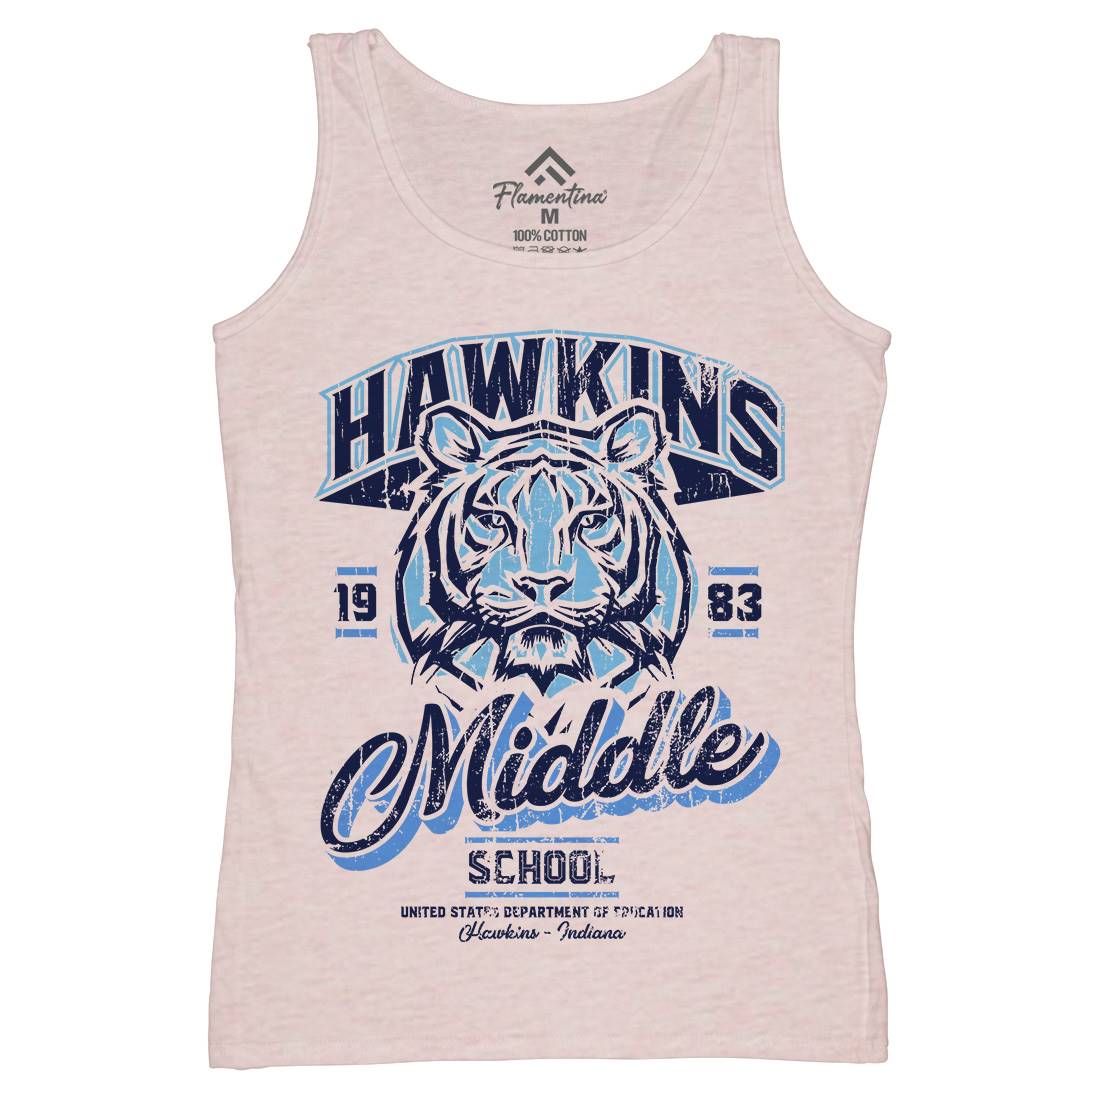 Hawkins School Womens Organic Tank Top Vest Horror D144